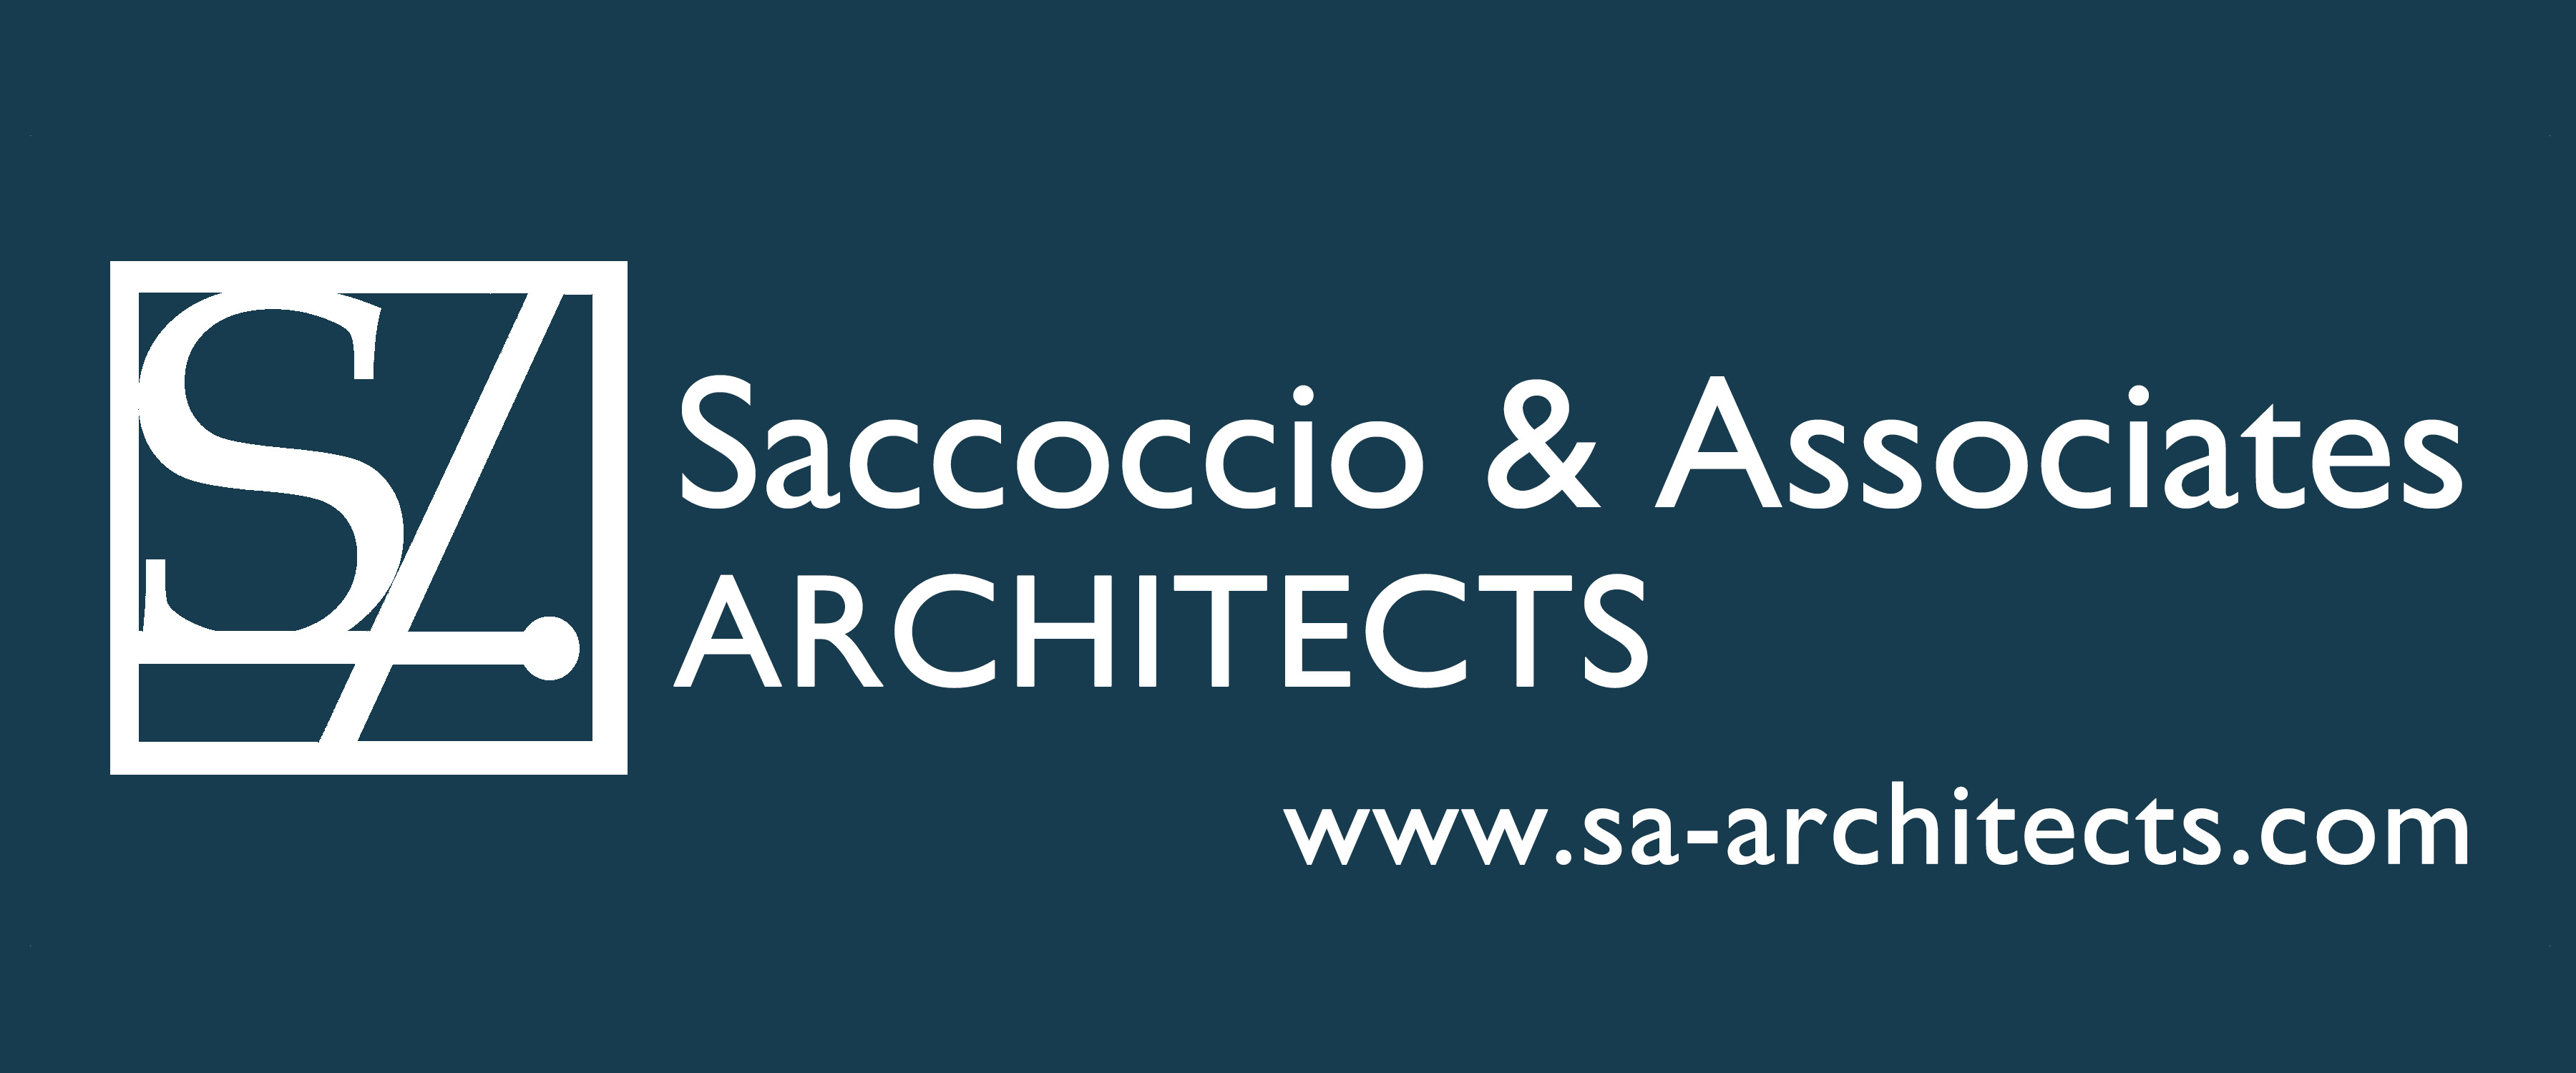 MMM-Saccoccio & Associates